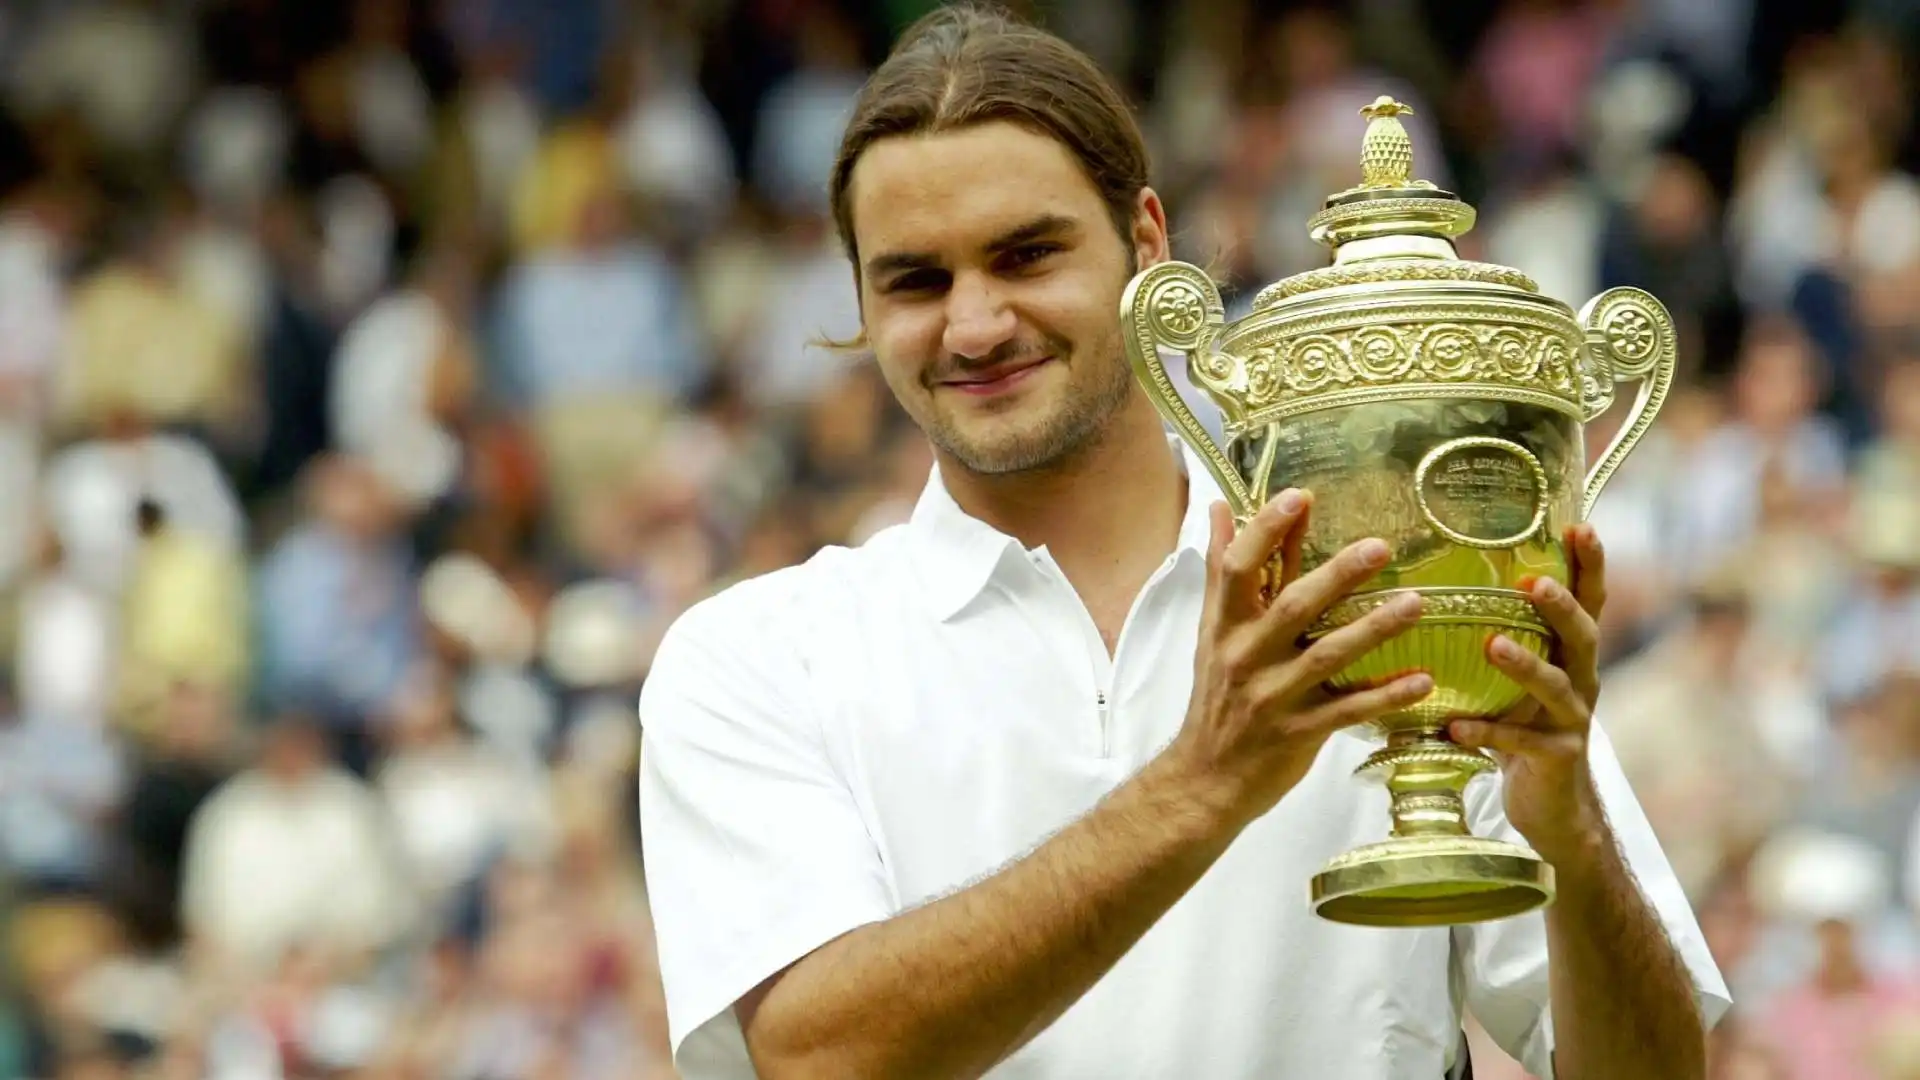 Nel 2003 Roger Federer vince il suo primo Slam, a Wimbledon